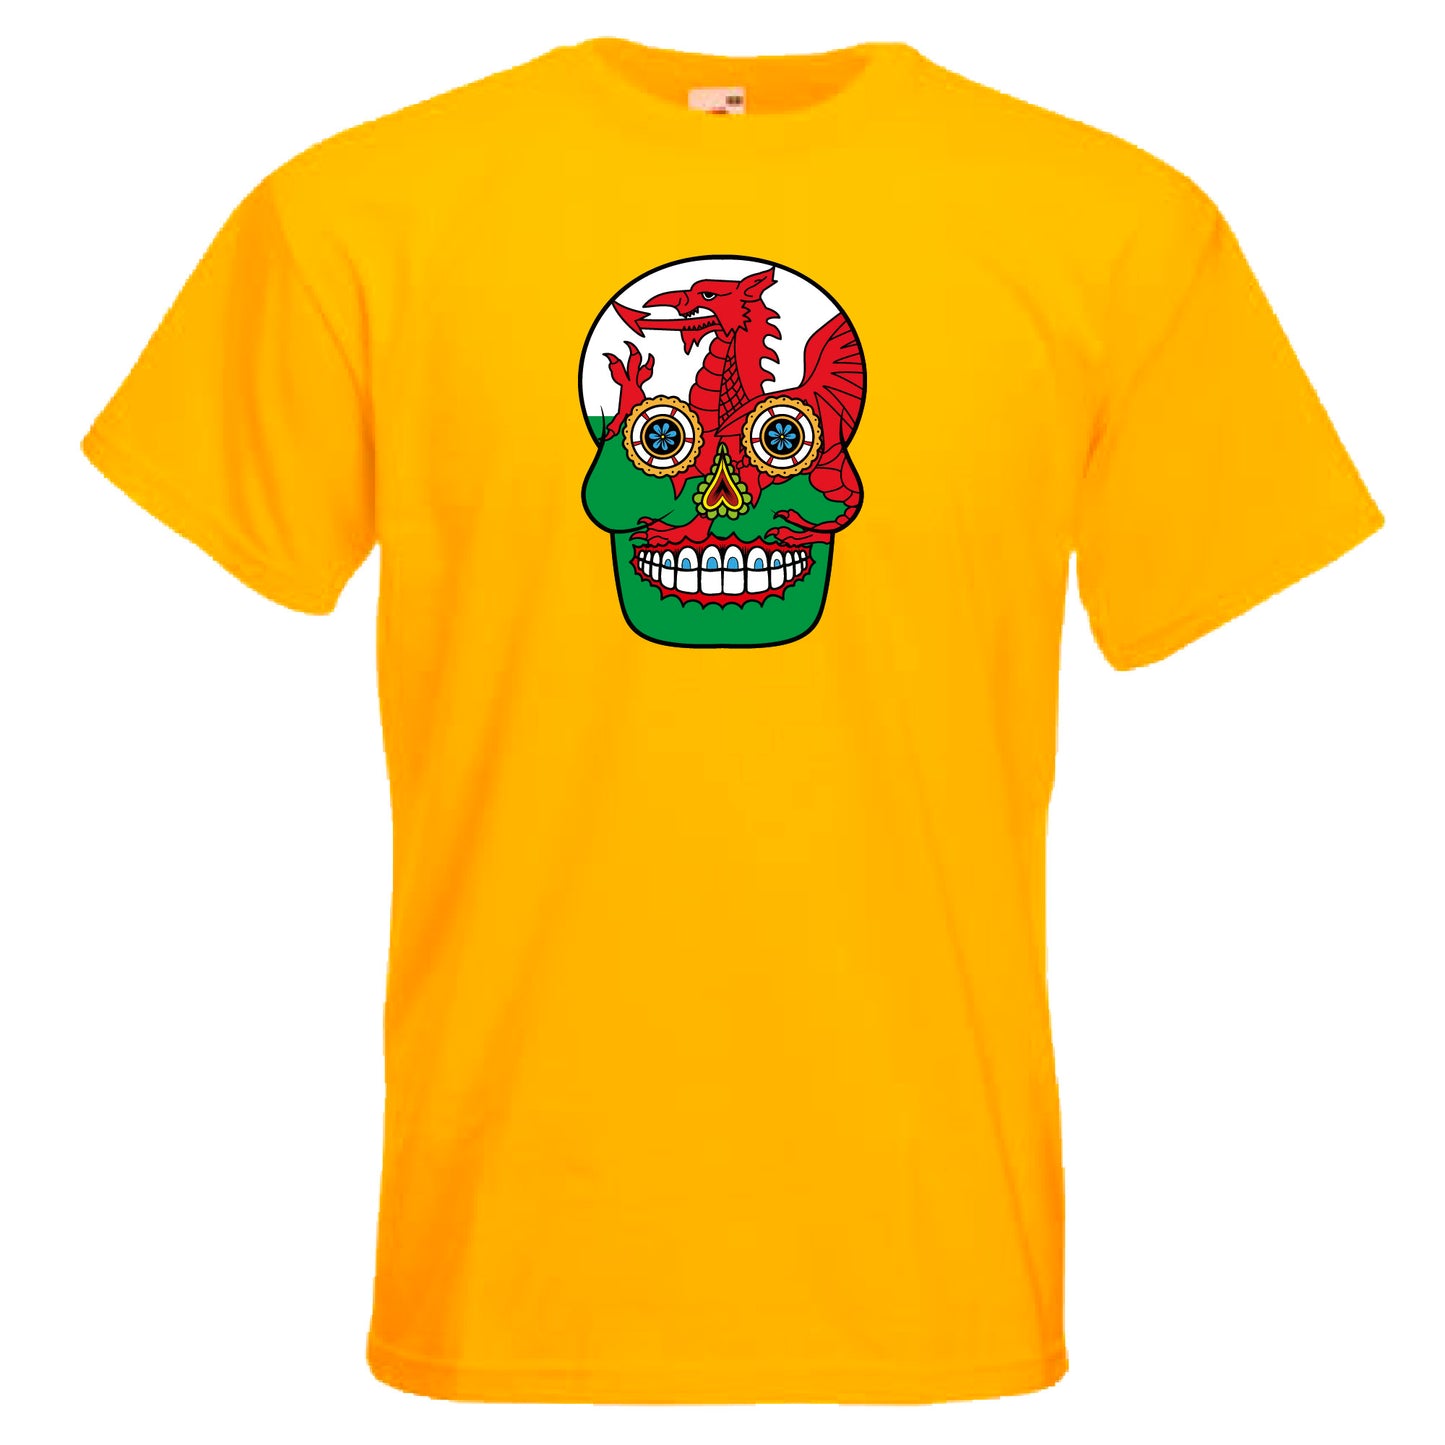 INDIGOS UG - T-Shirt Herren - Wales - Skull - Fussball